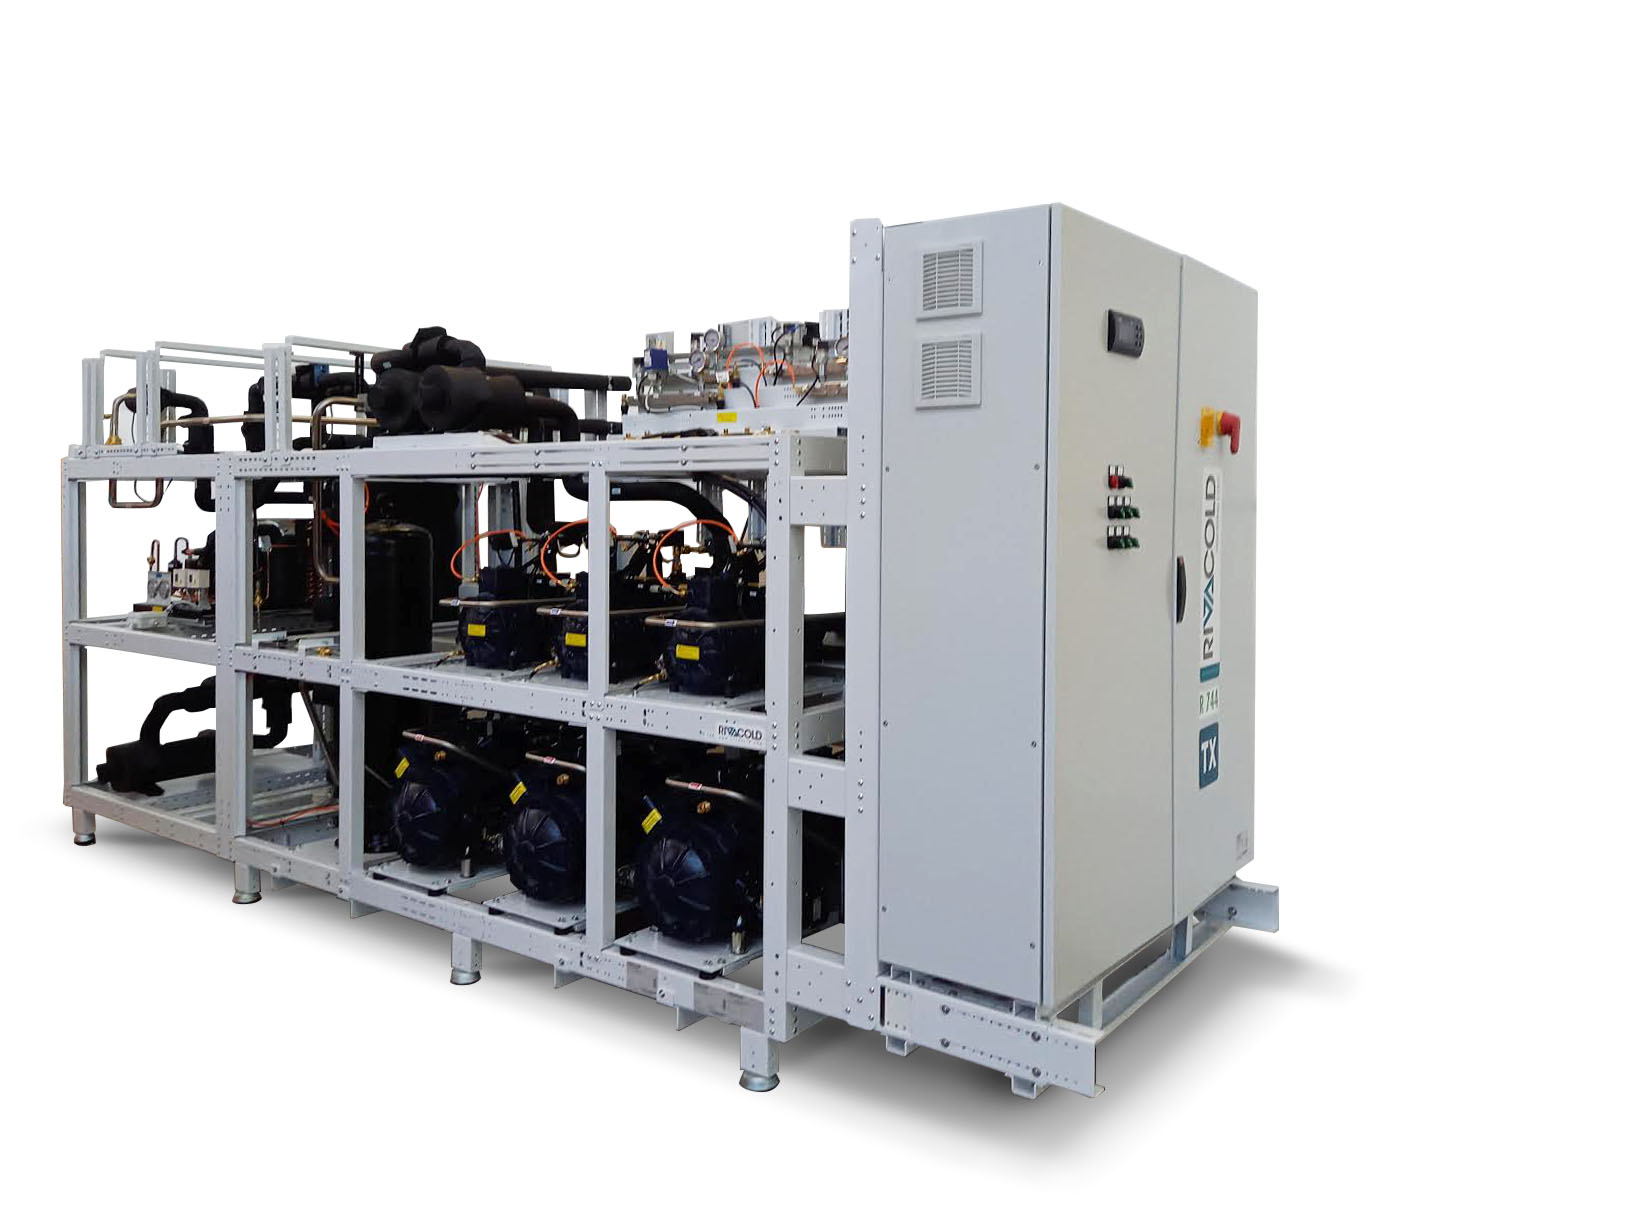 TX - CO2 transcritical multi-compressor pack system